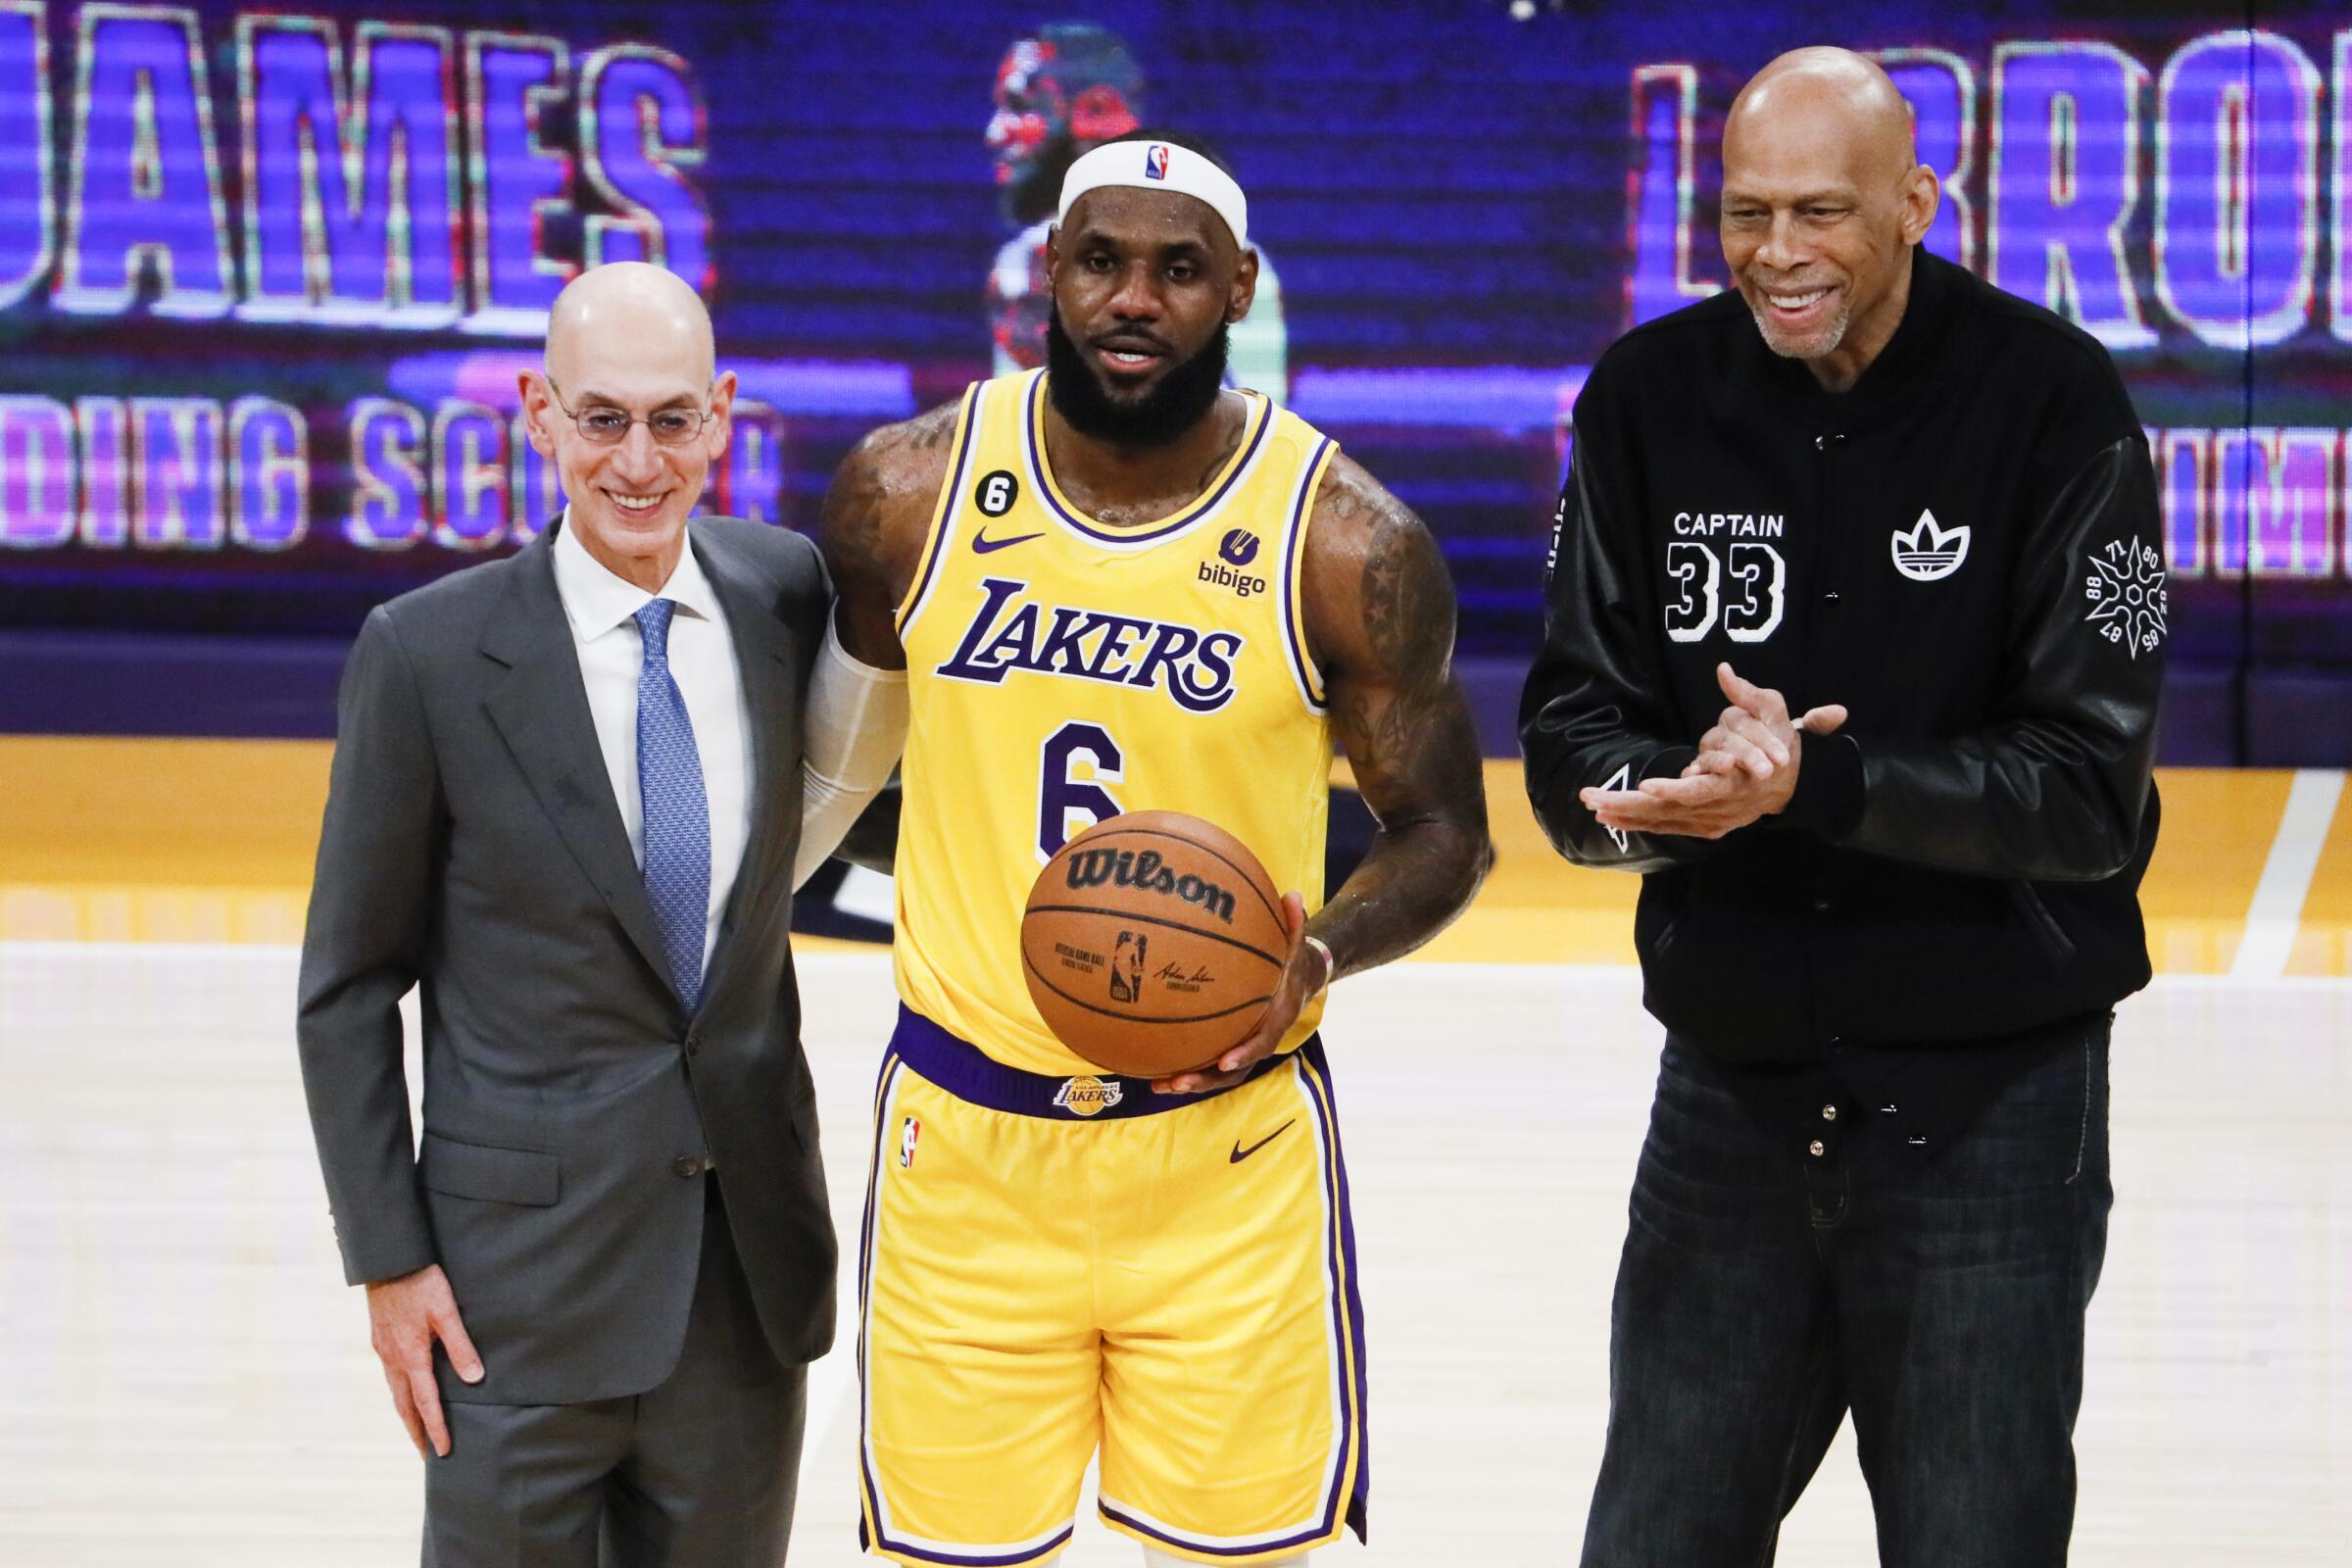 LeBron James, center, poses with NBA commissioner Adam Silver and Kareem Abdul-Jabbar.